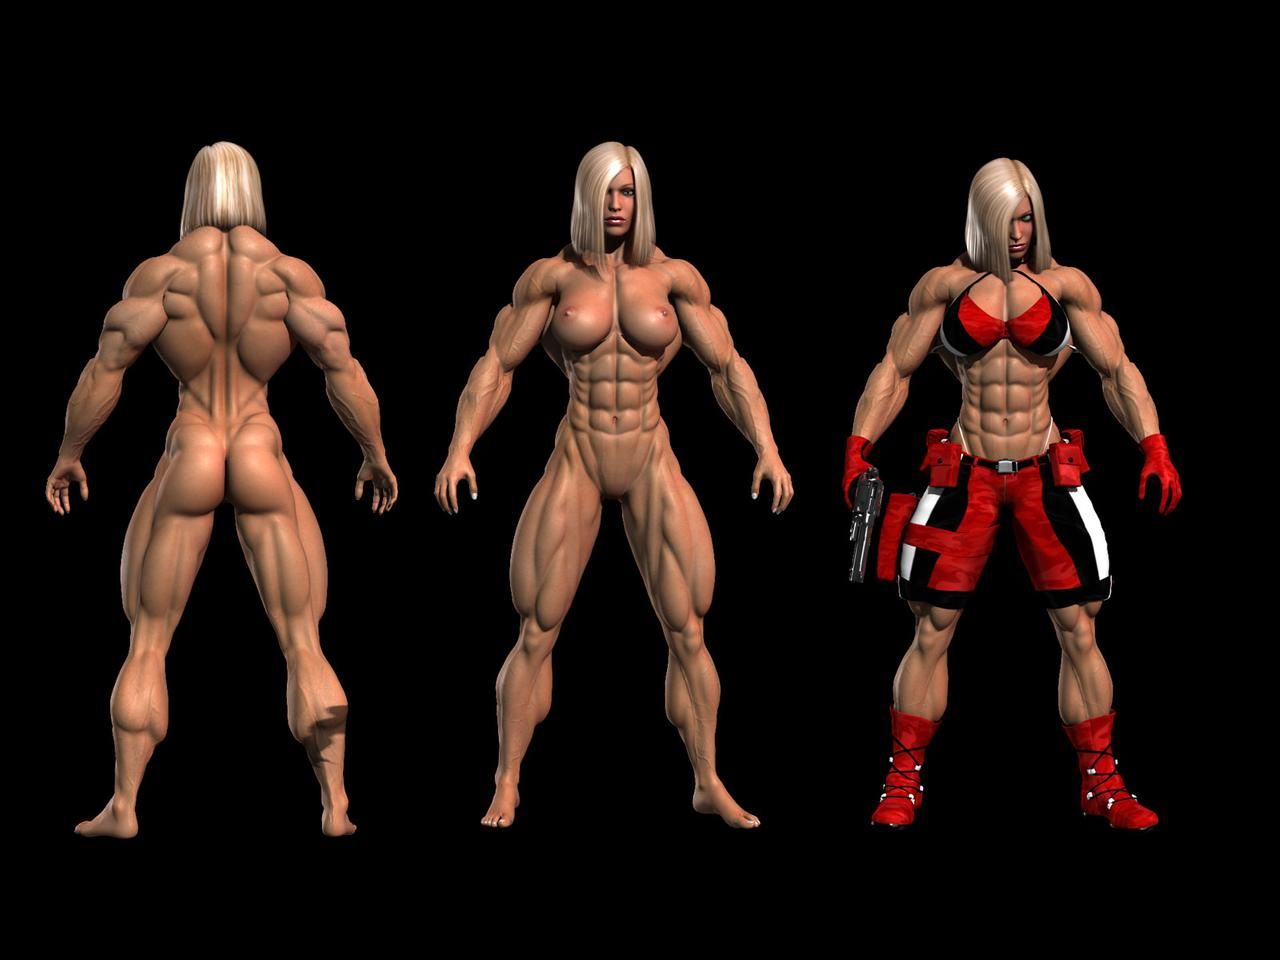 Muscle girls 3D models_ part 2 by Tigersan 117